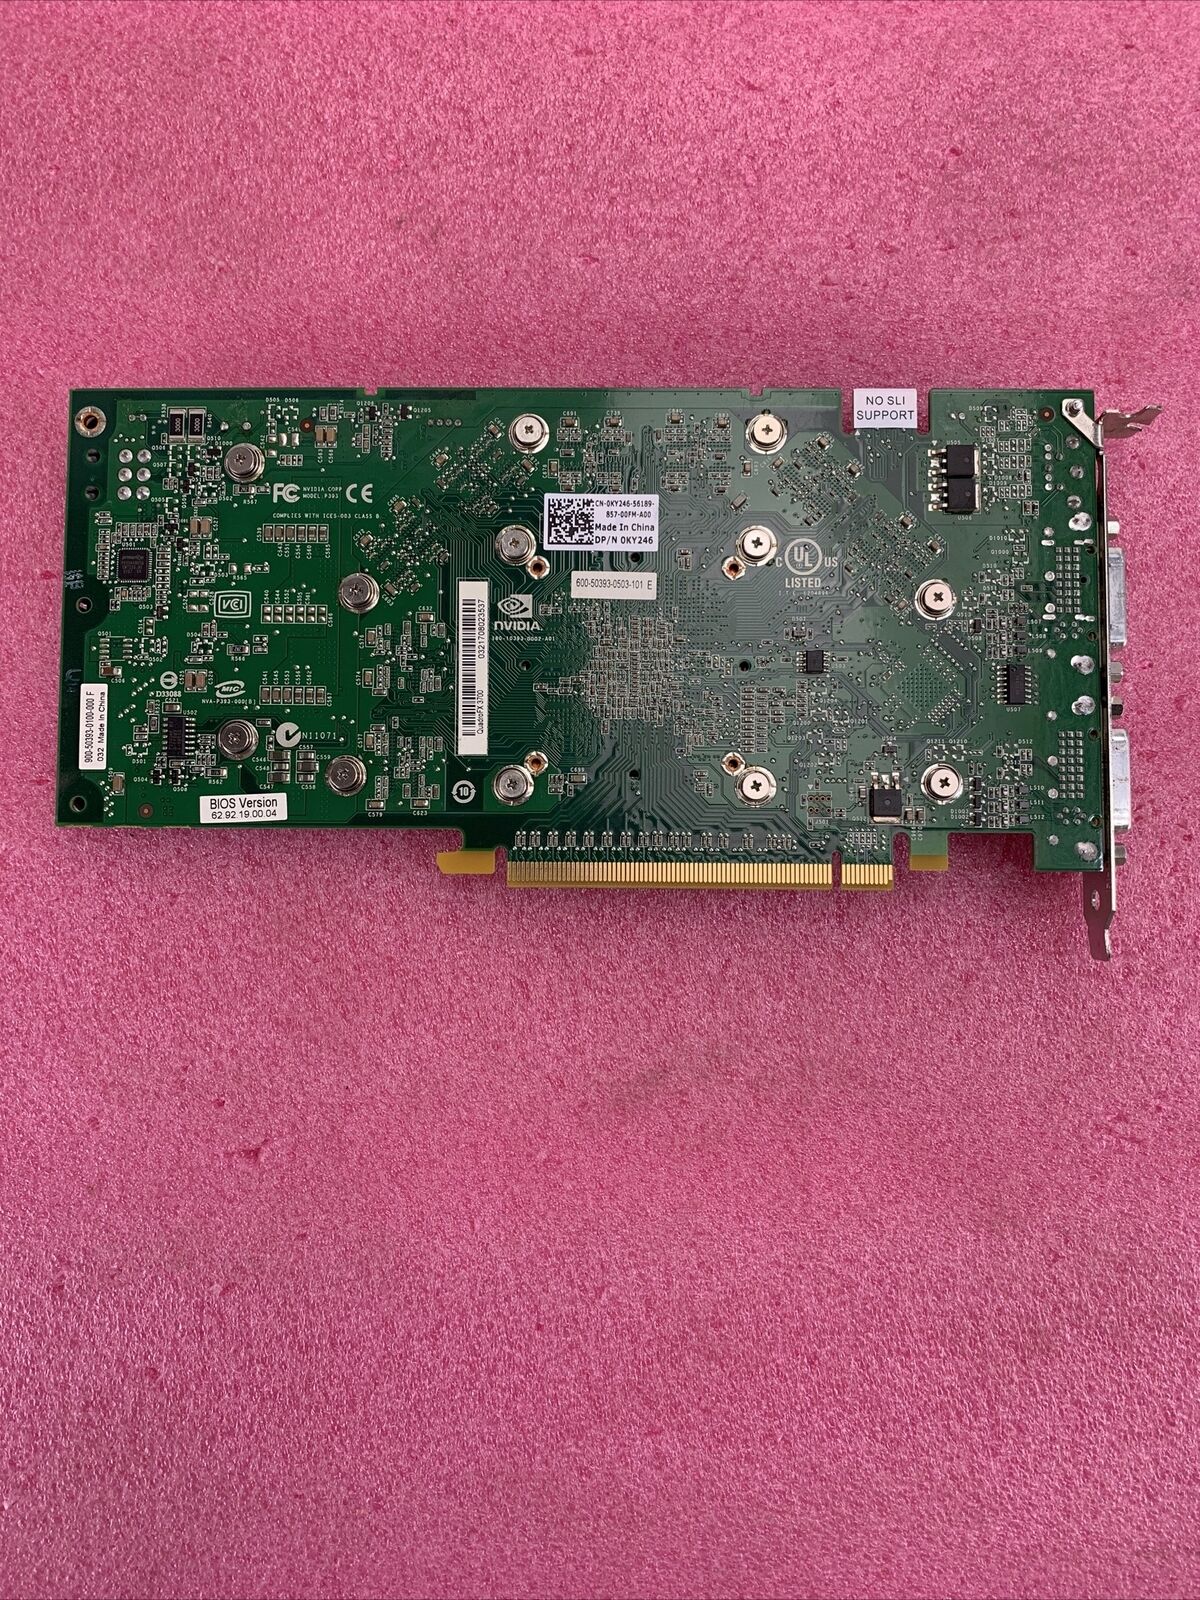 Nvidia Quadro FX 3700 512MB Graphics Vard KY246 PCIe